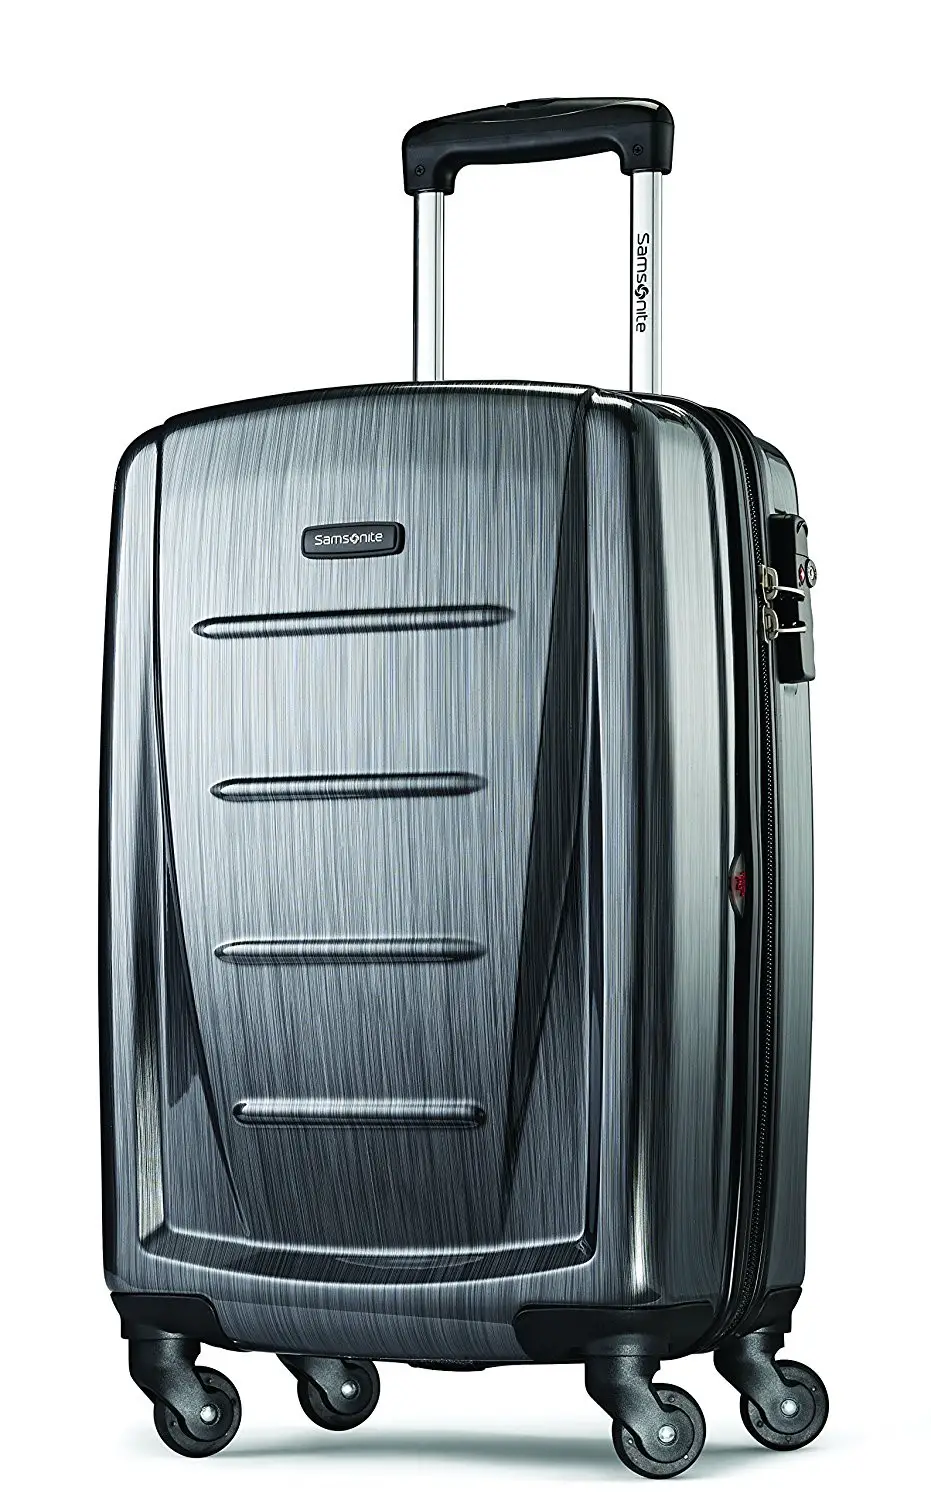 Samsonite carry-on luggage